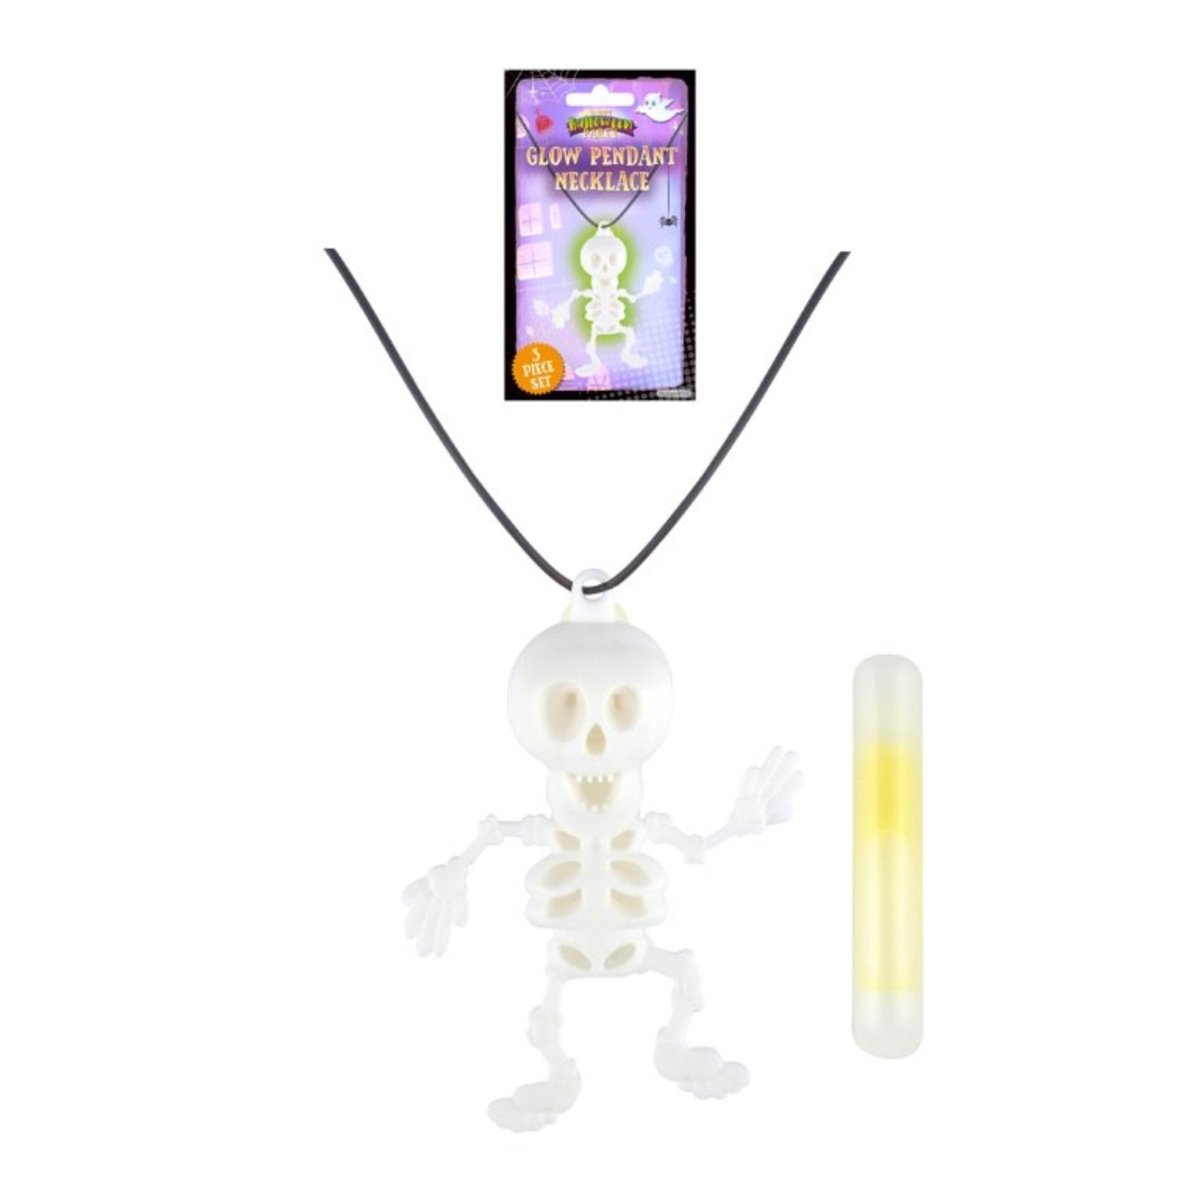 Glow in the Dark Skeleton Pendant - Kids Party Craft